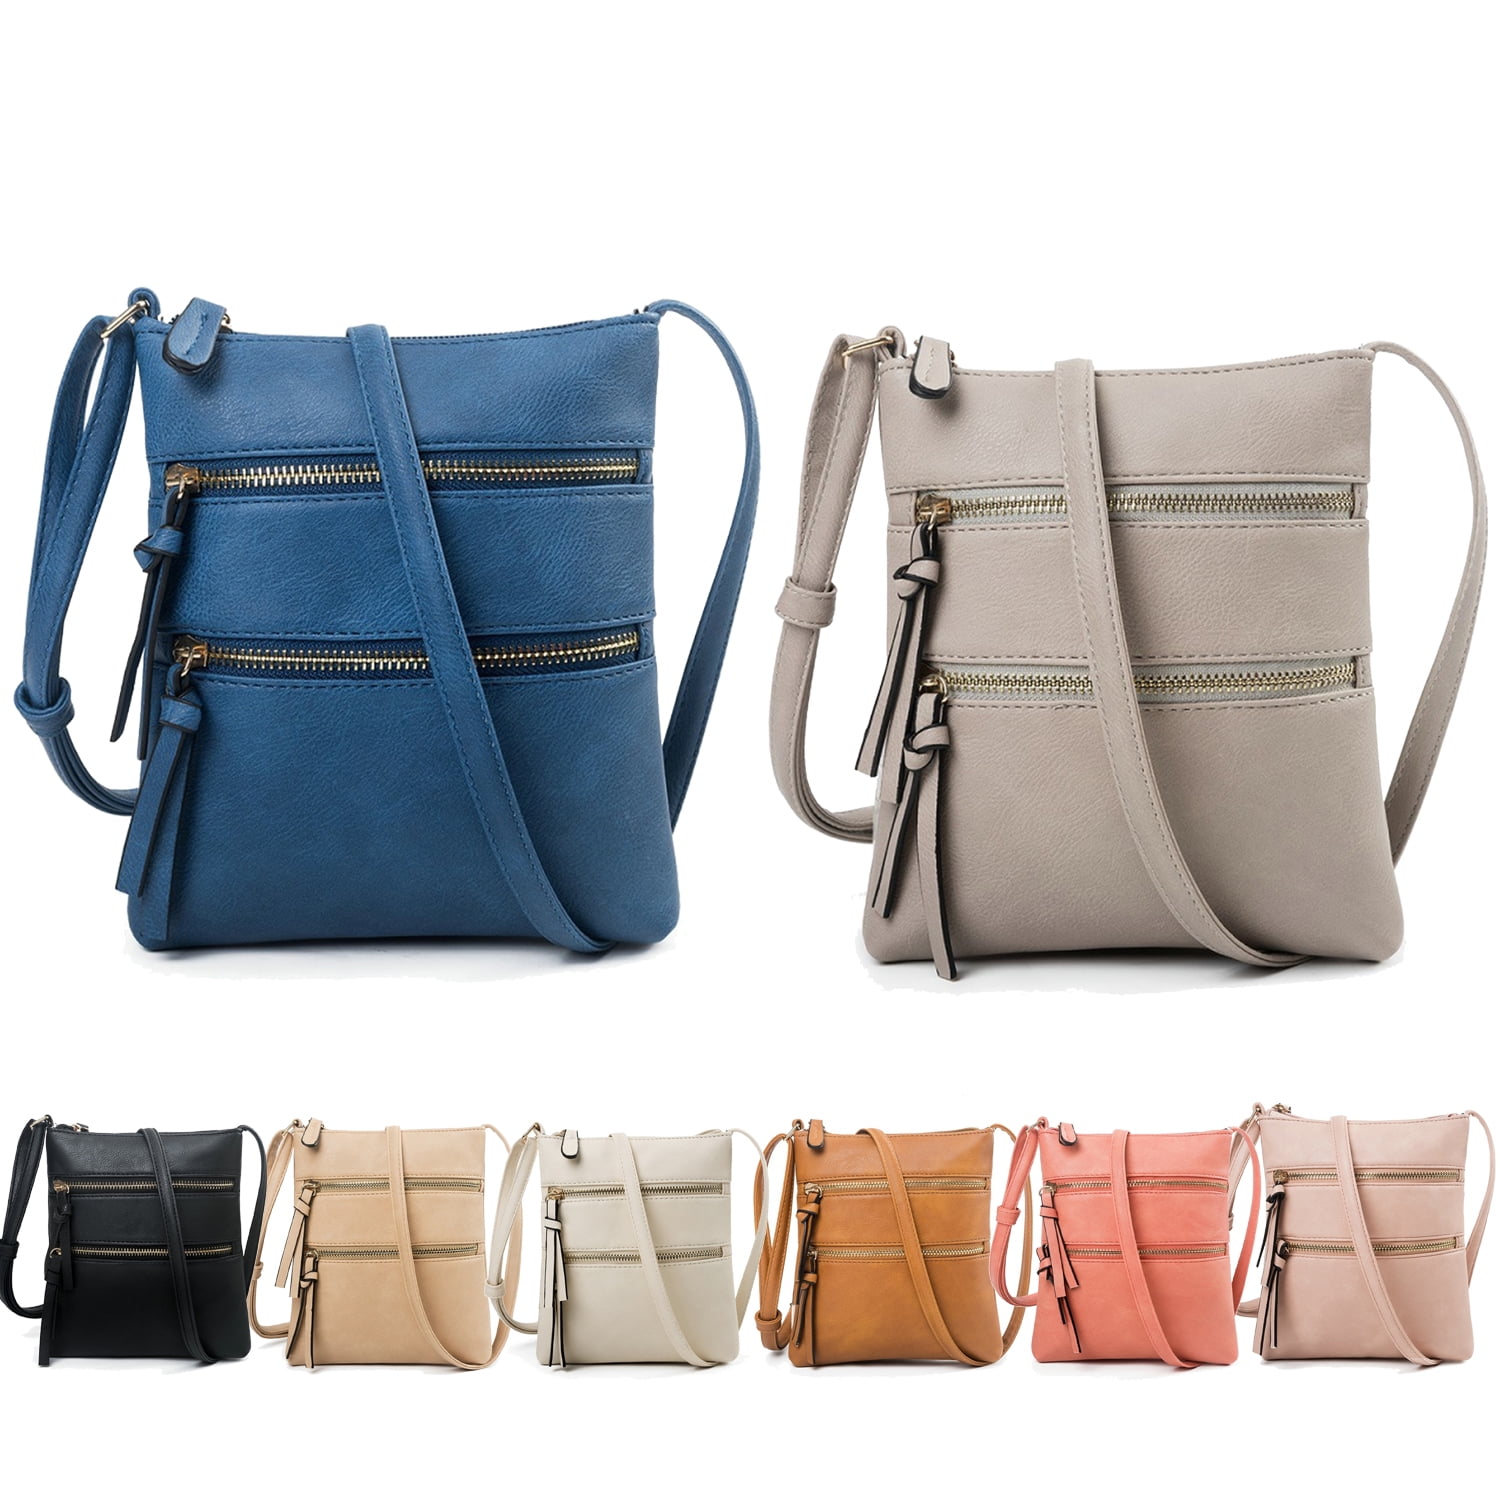 Niuer Ladies PU Leather Crossbody Handbag for Women Casual Satchel Tote Bags  Multi Pockets Travel Shopping Shoulder Bag Purse Light Grey - Walmart.com